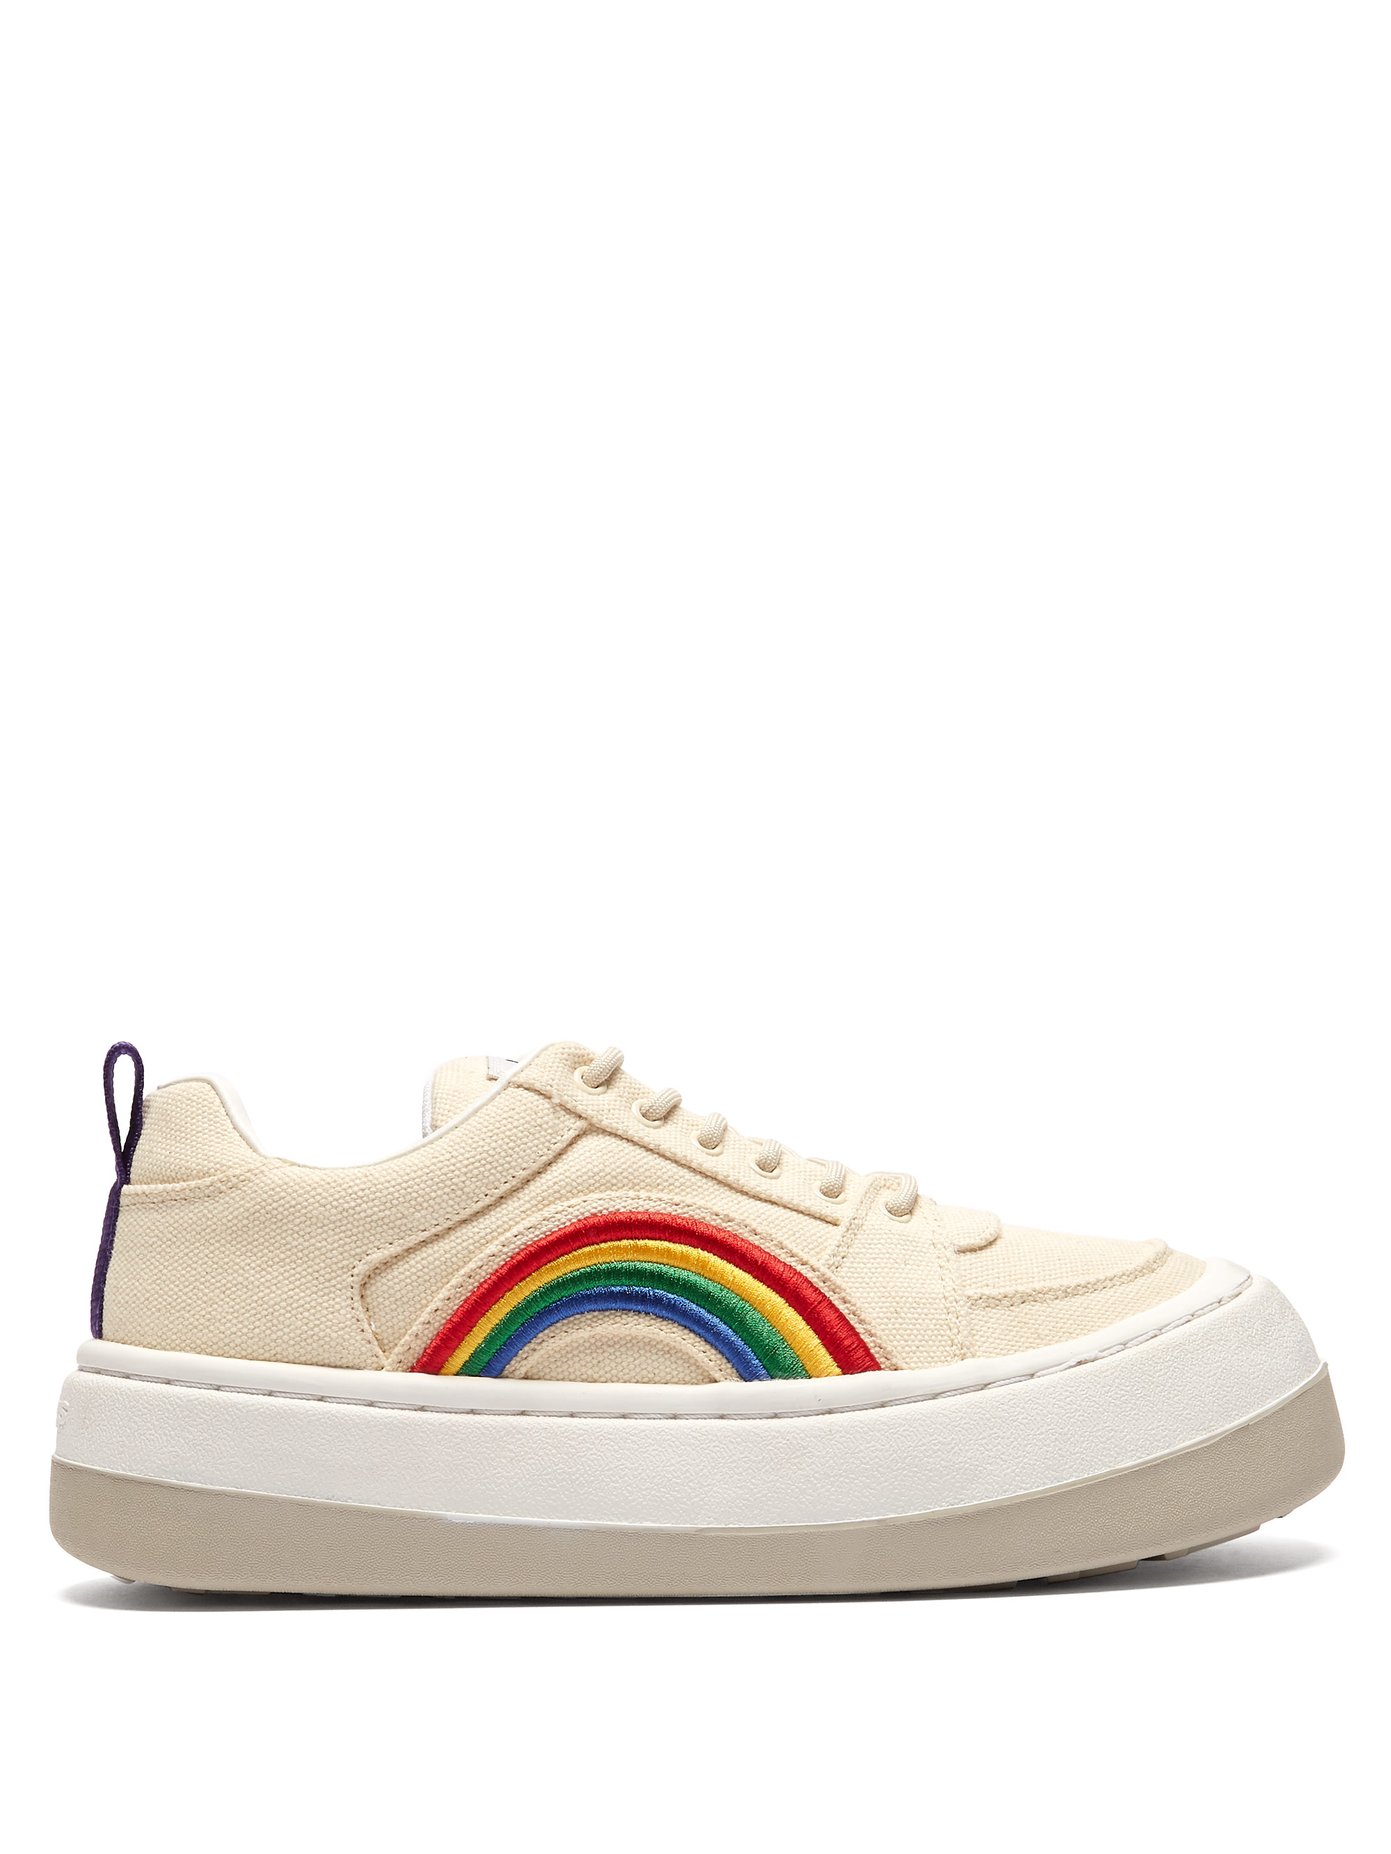 rainbow sole trainers